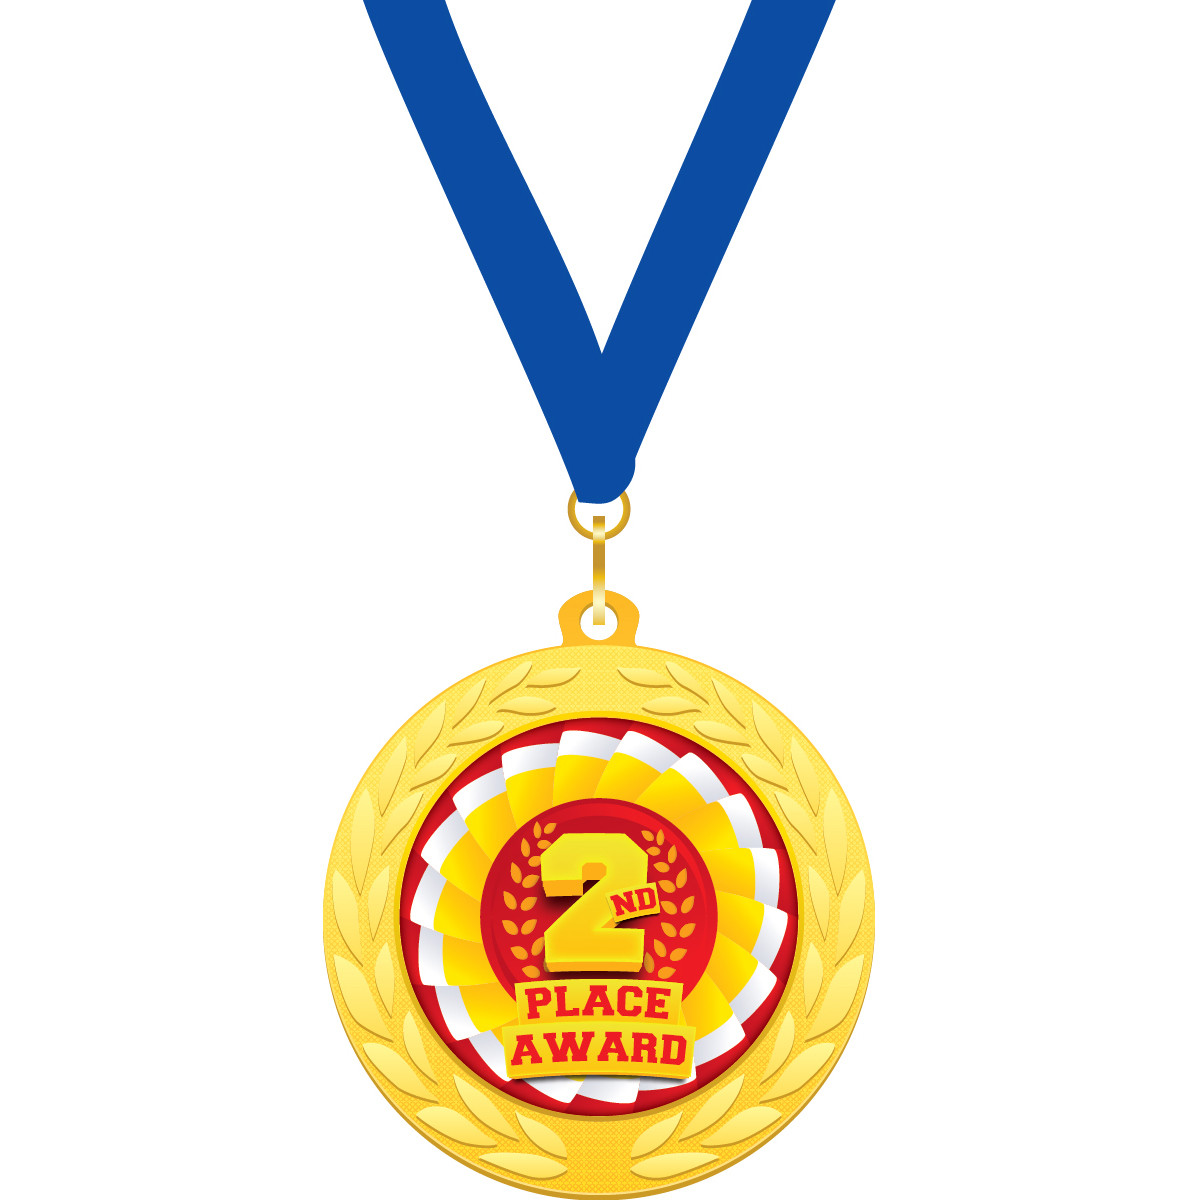 Gold Medallion - 2nd Place Award